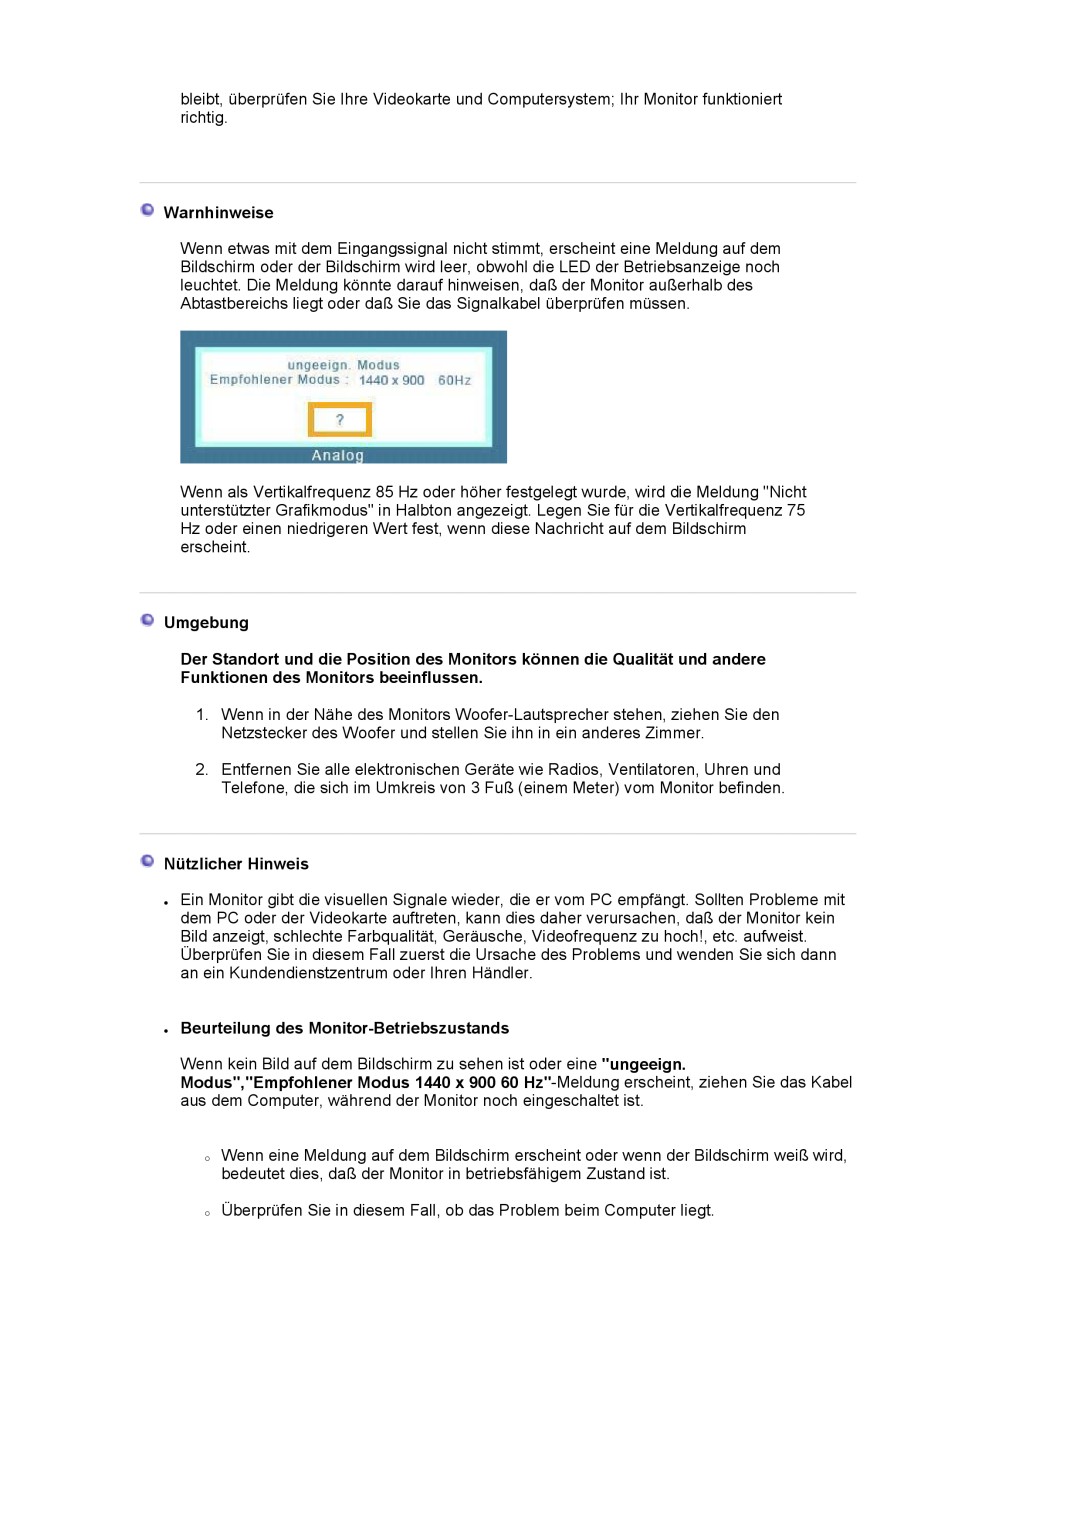 Samsung LS19HAWCSQ/EDC manual Warnhinweise, Umgebung, Nützlicher Hinweis, z Beurteilung des Monitor-Betriebszustands 